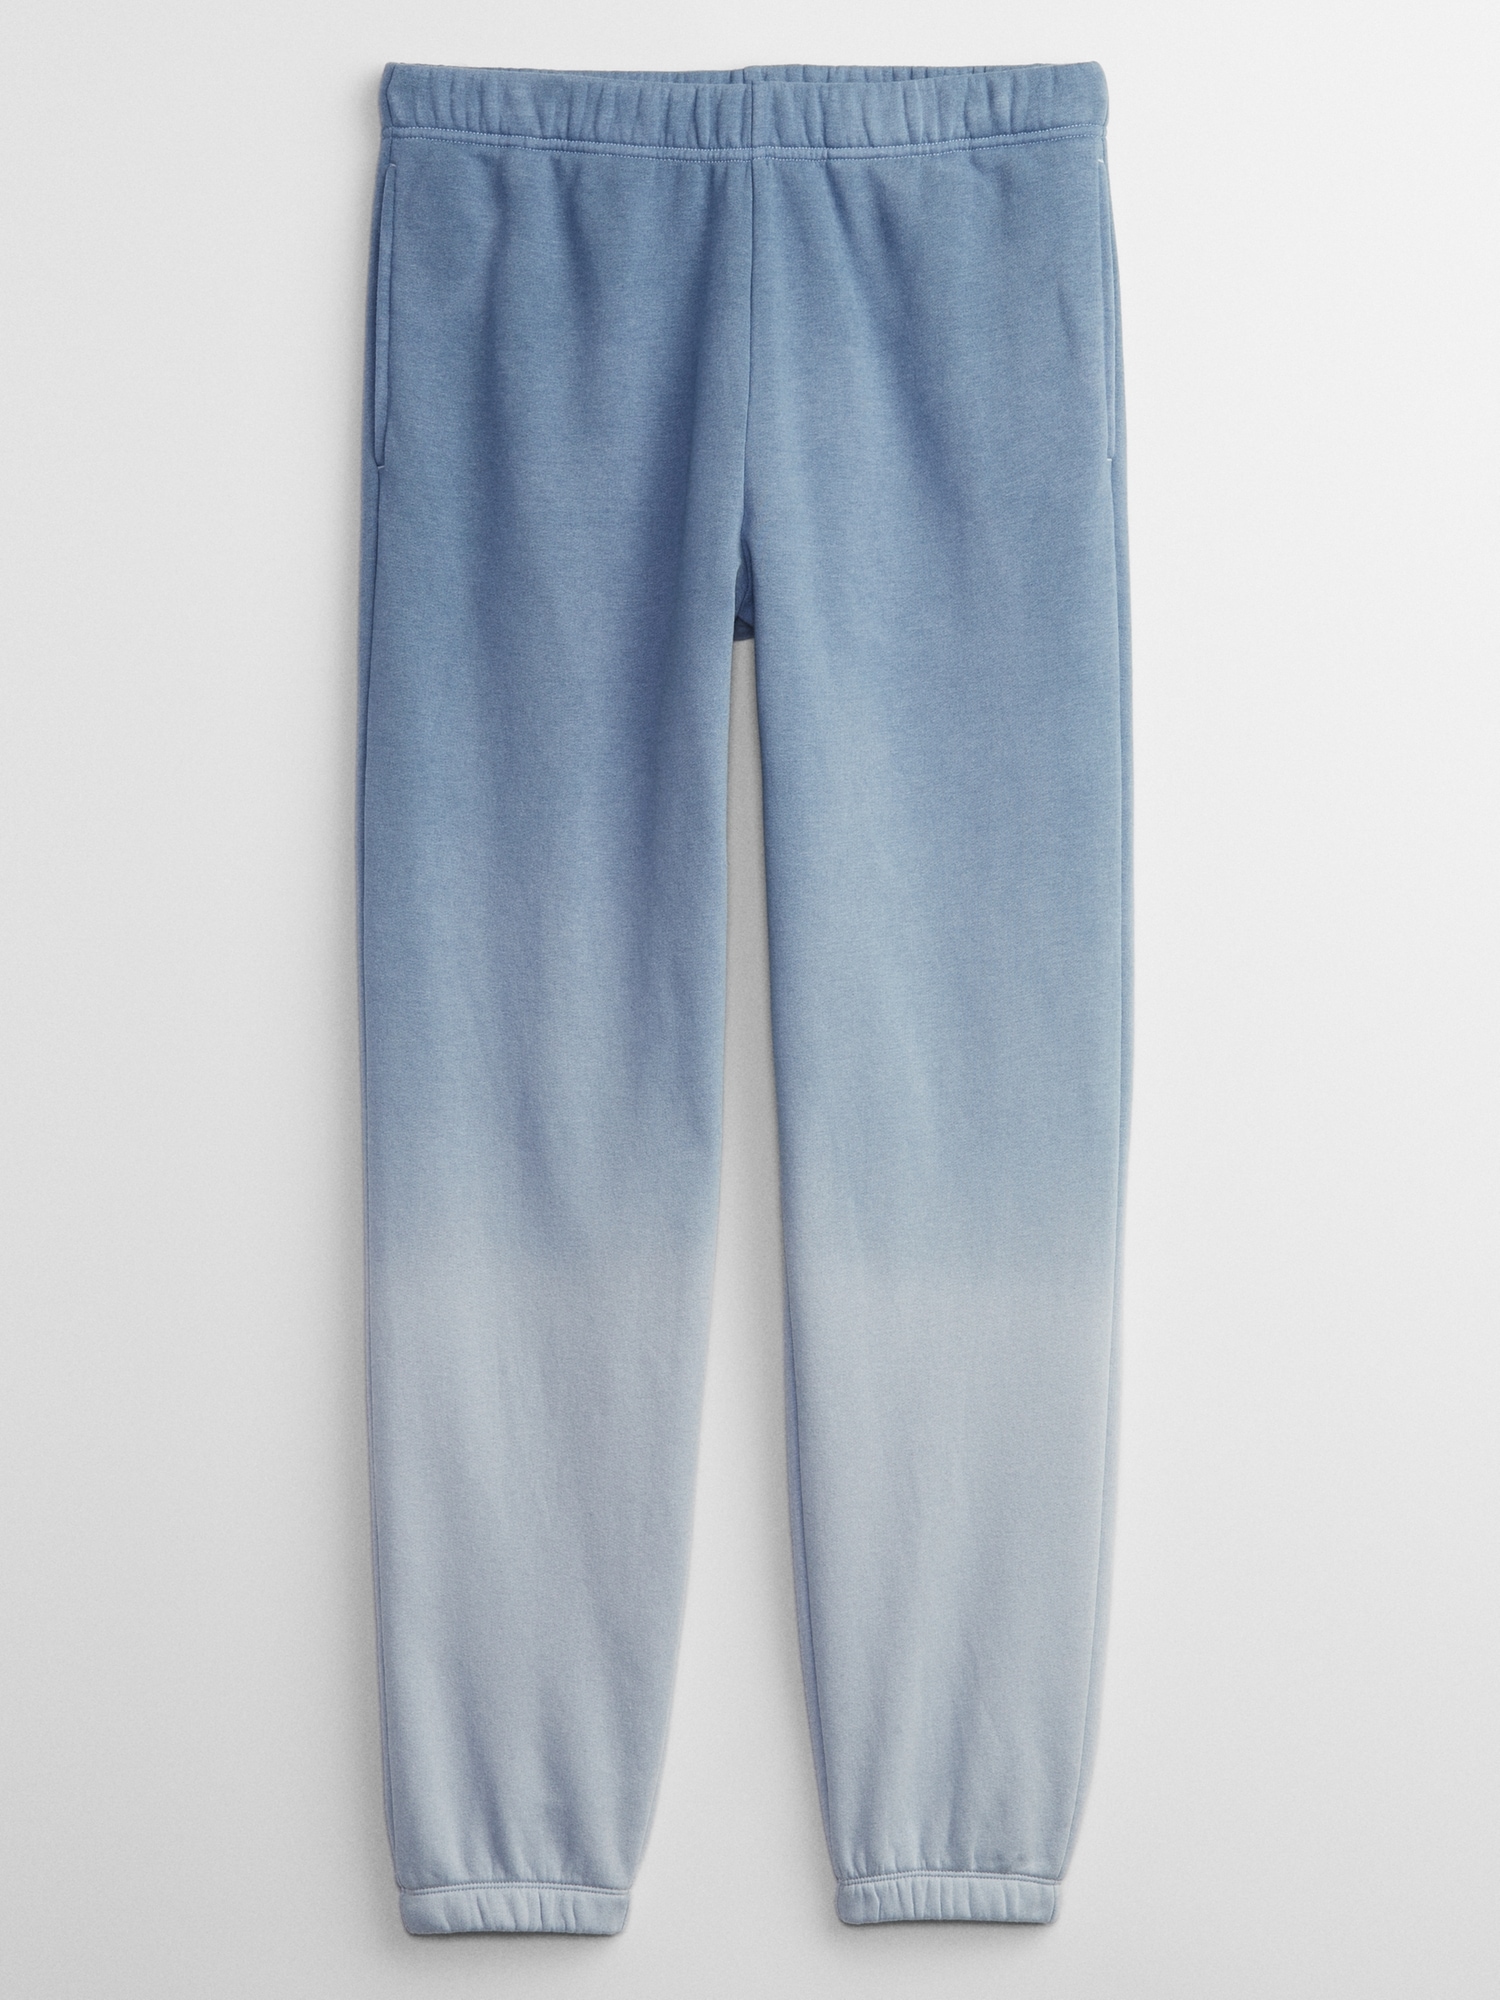 Vintage Soft Tie-Dye Sweatpants | Gap Factory